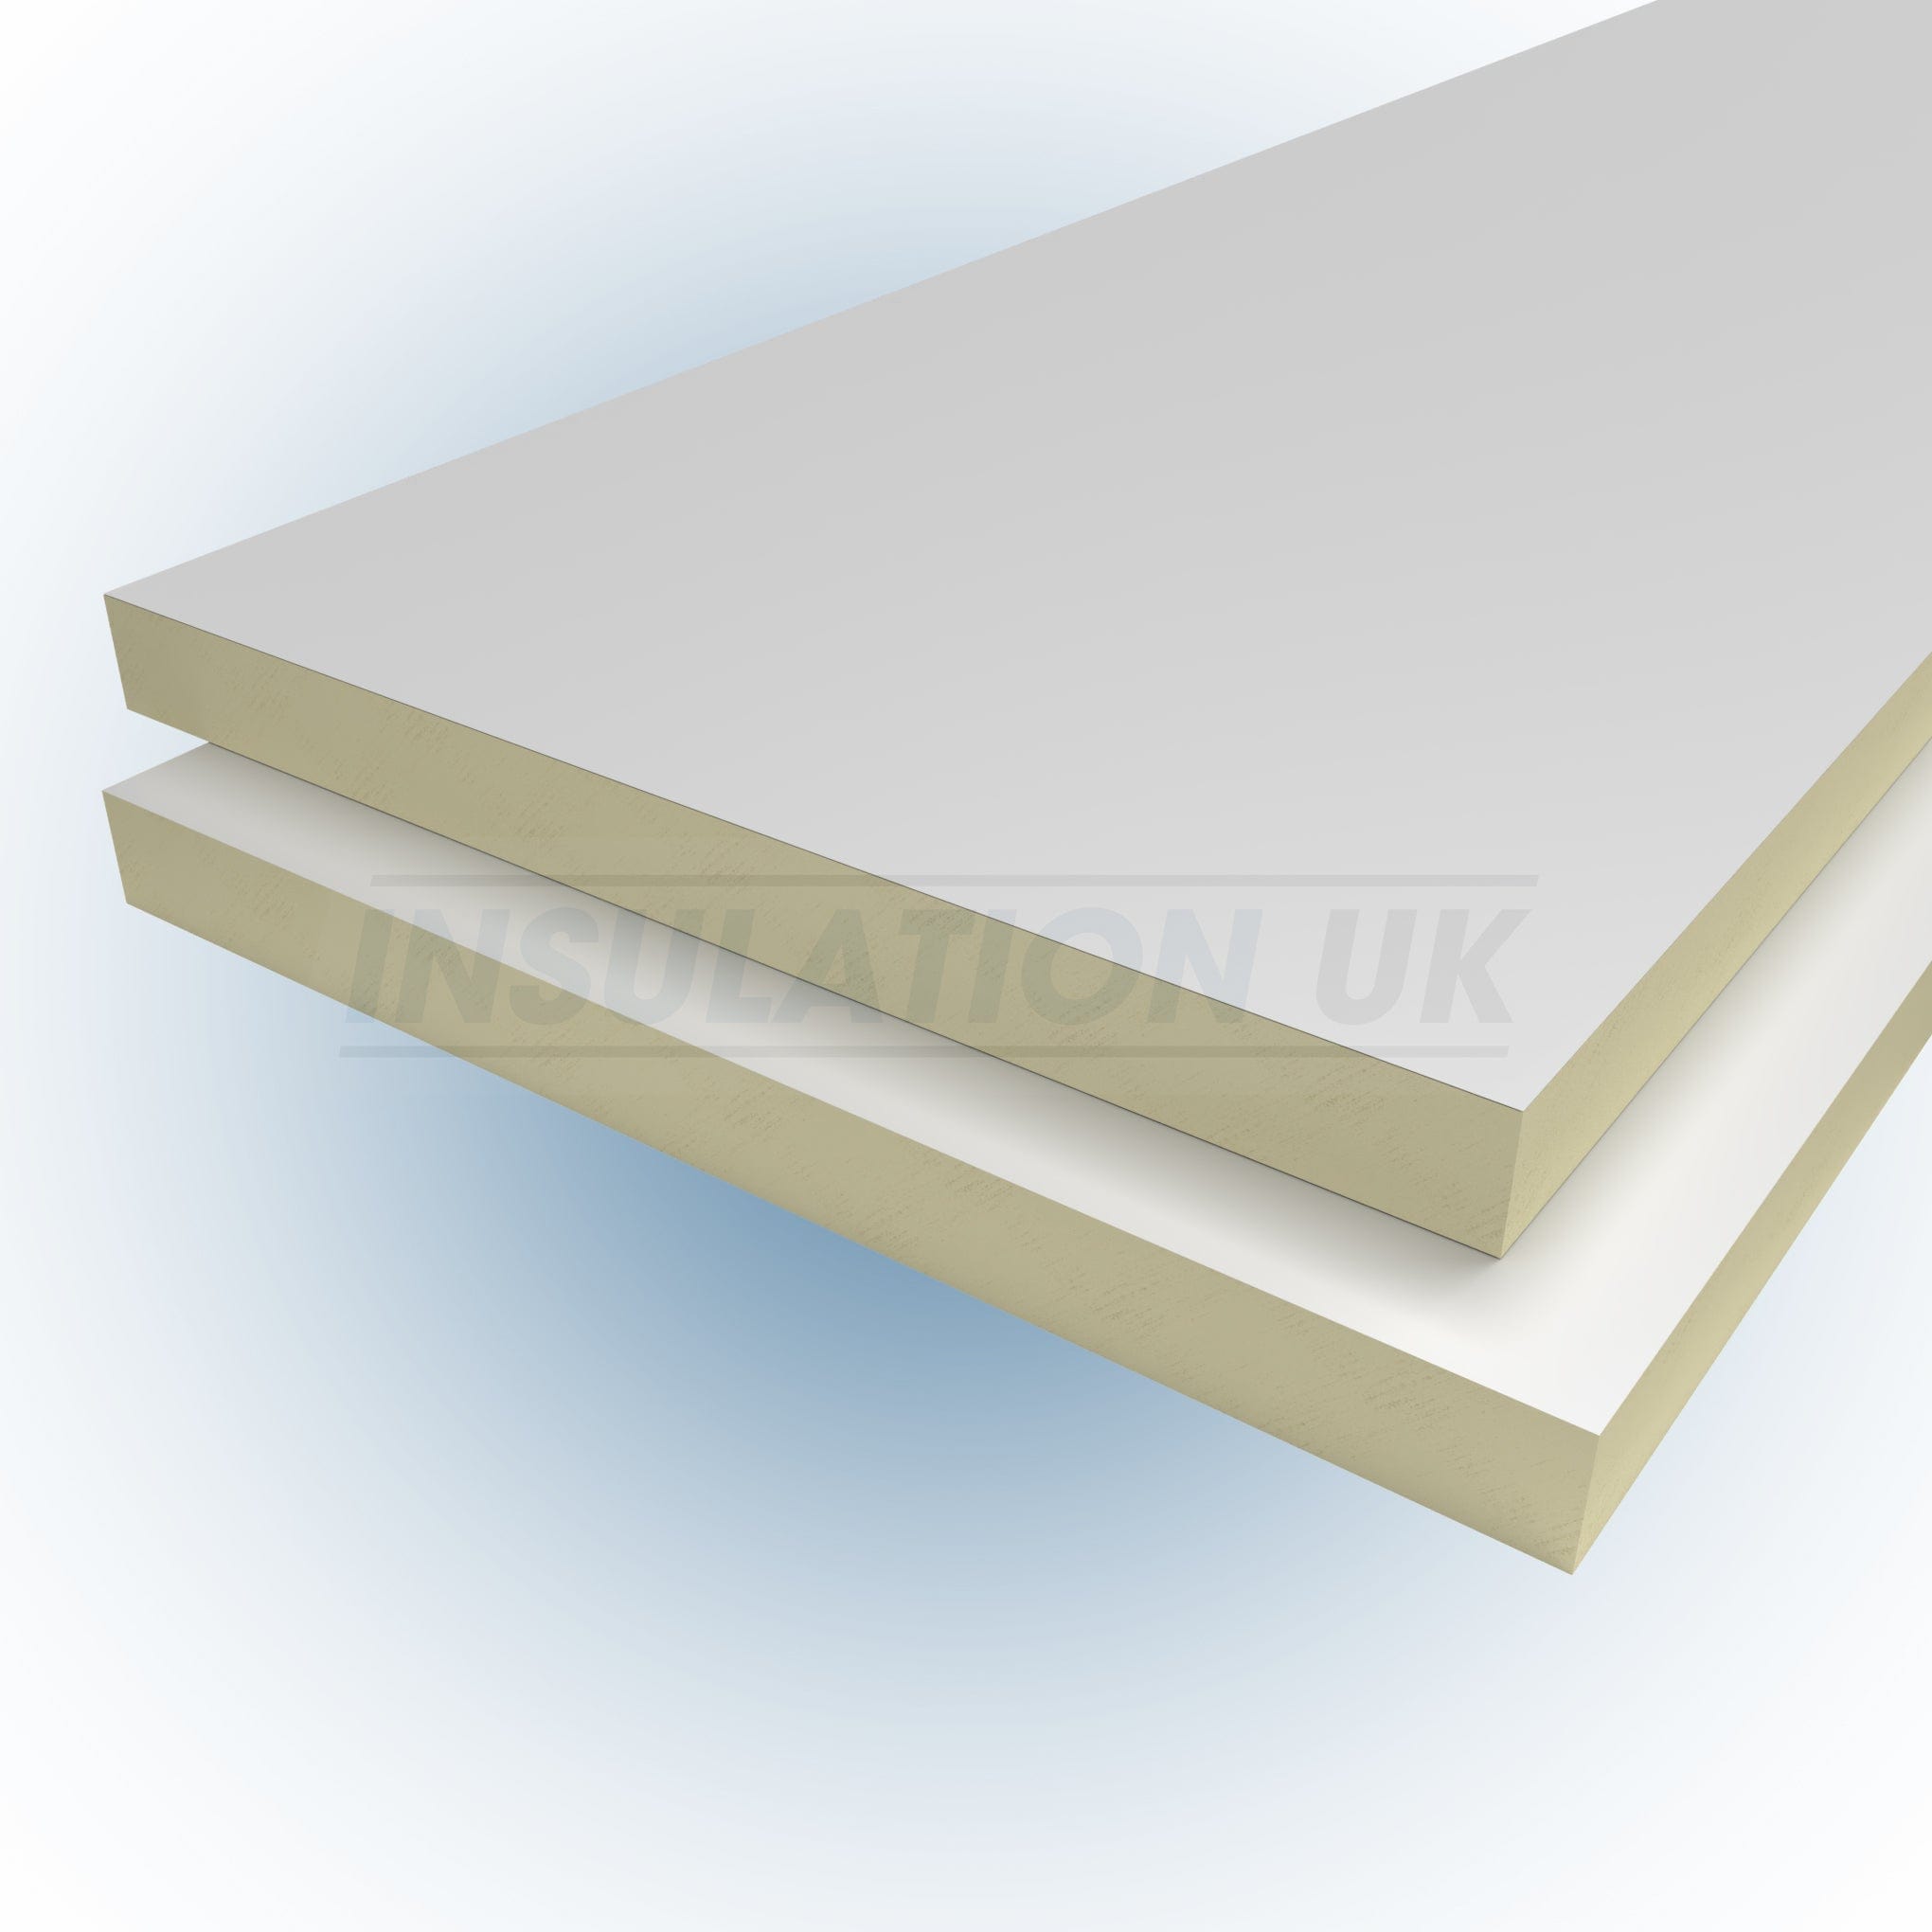 InsulationUK Pir Insulation Strips PIR Insulation Strips | 2400mm x 600mm | Pack of 2